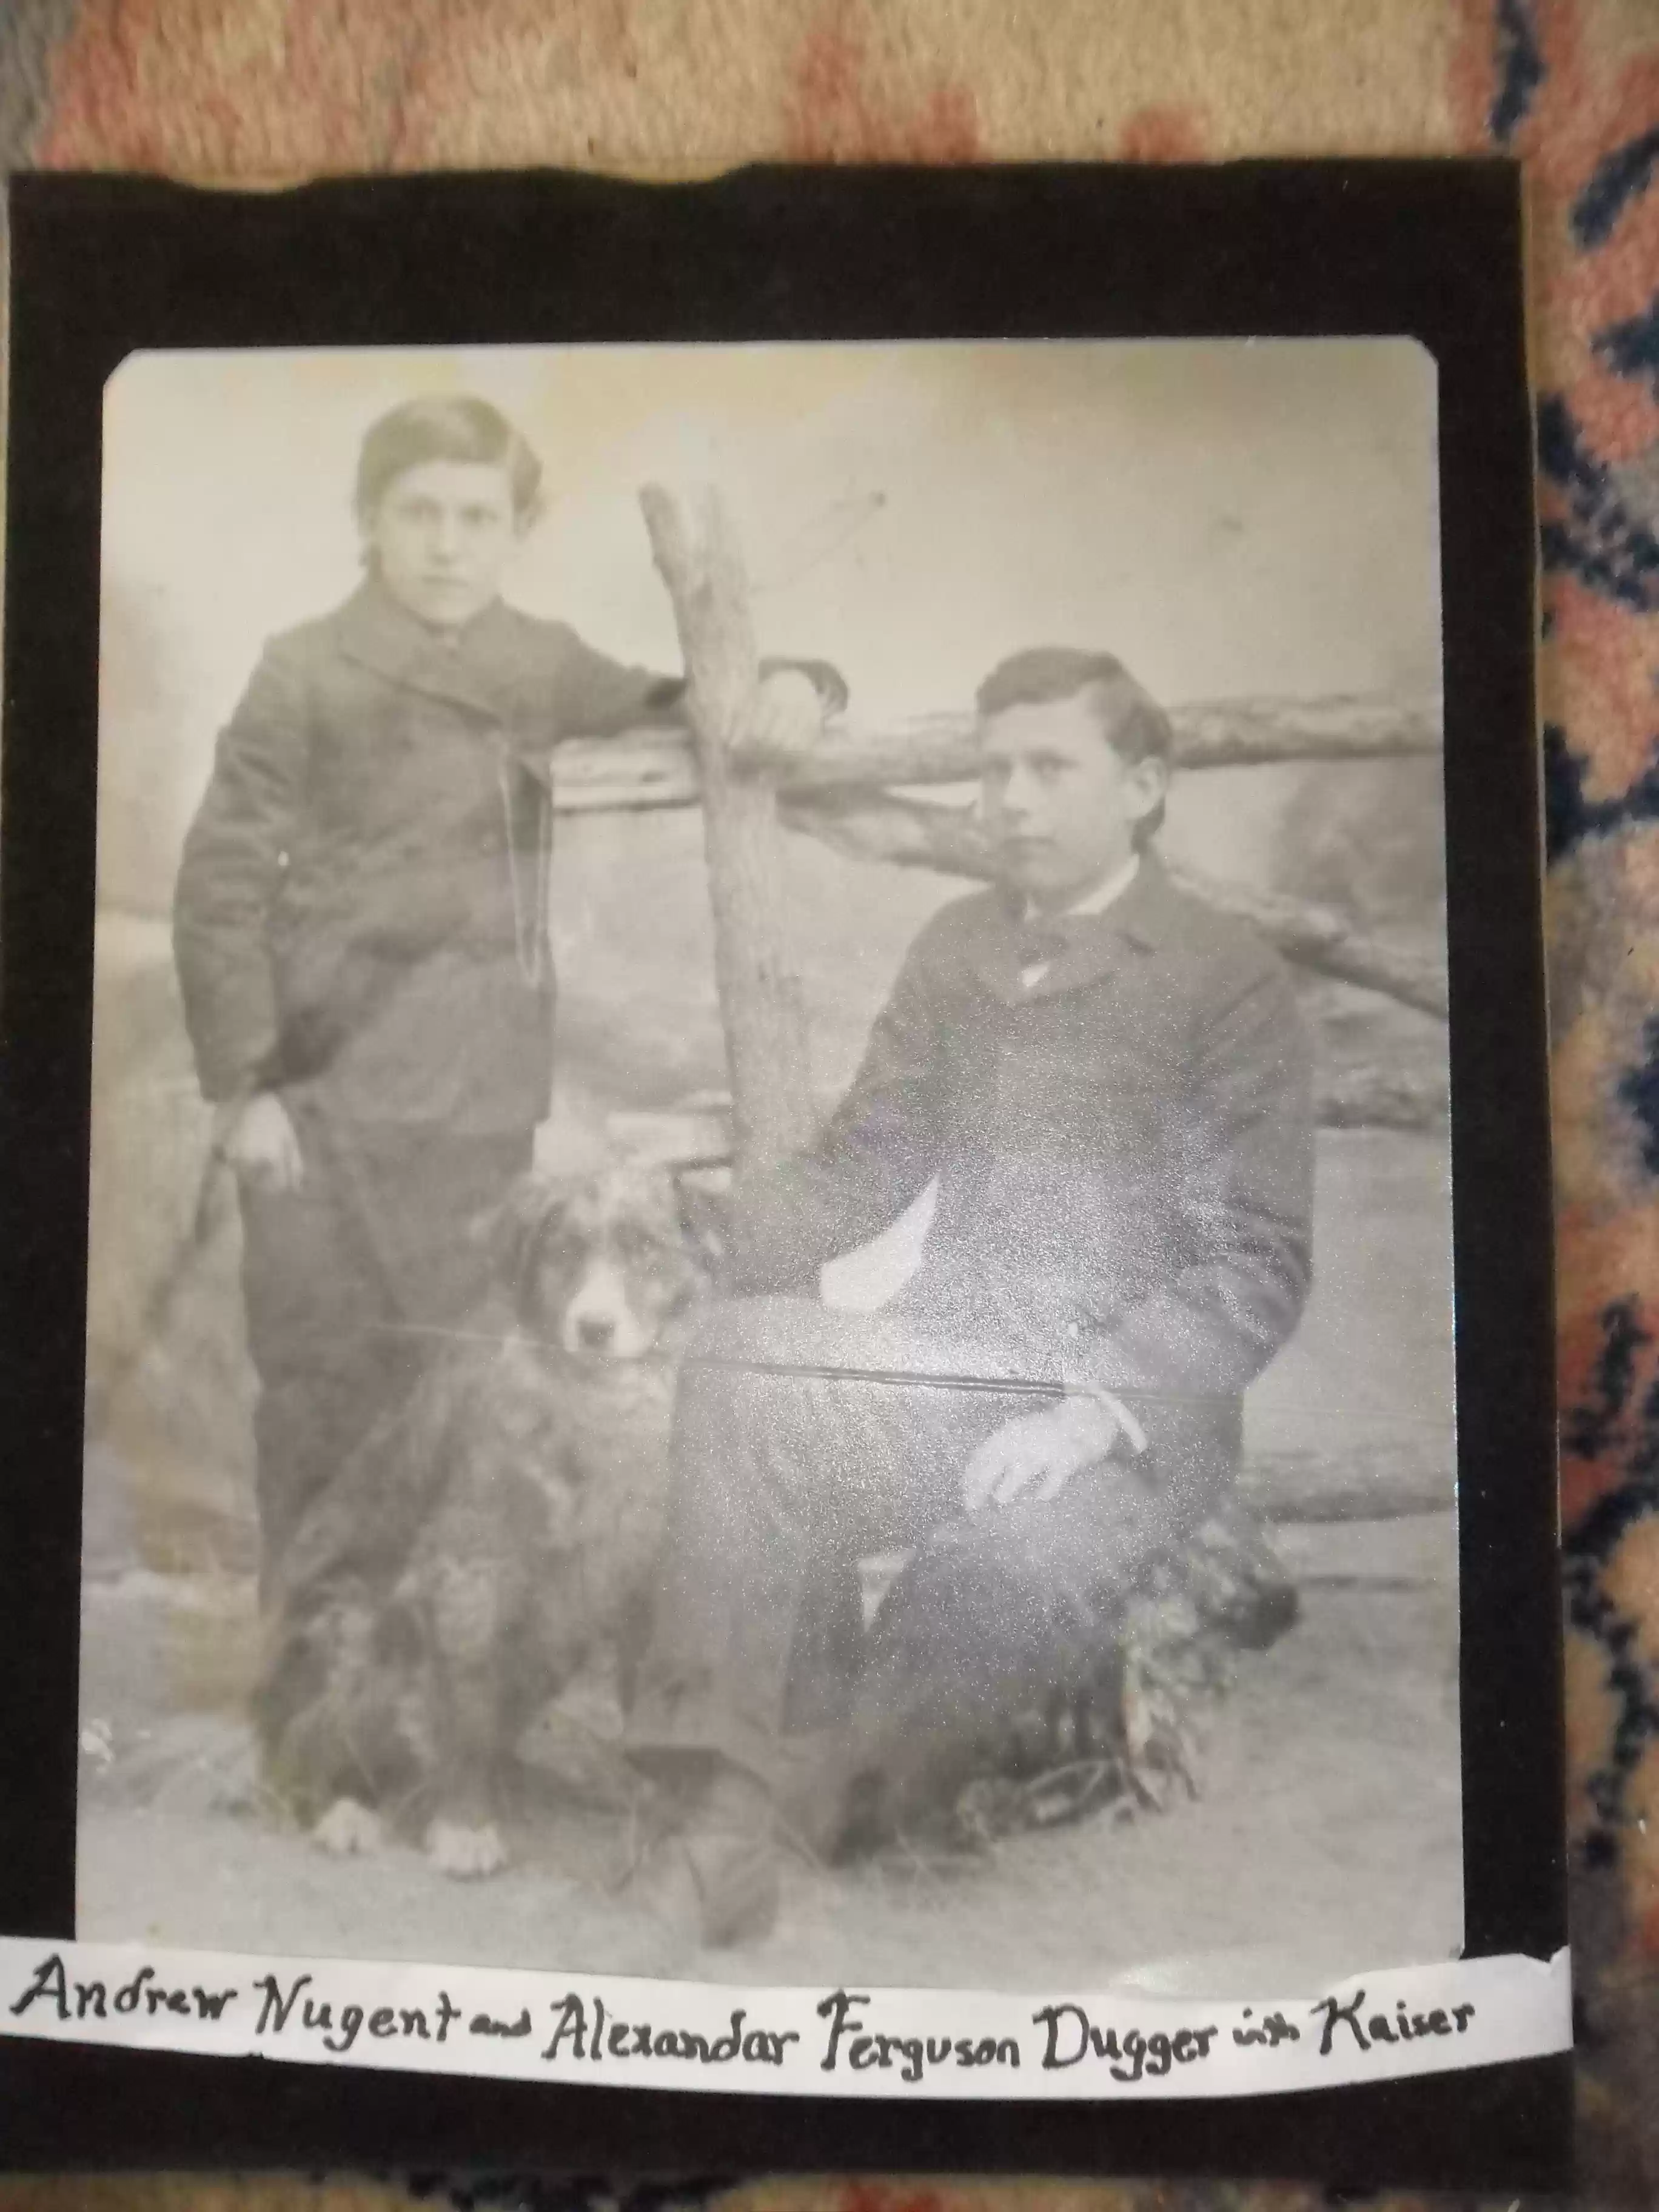 SAM_0495-Lois' grandfather, Alexander Nugent Dugger, with his brother, Alexander Ferguson Dugger and their dog Kaiser